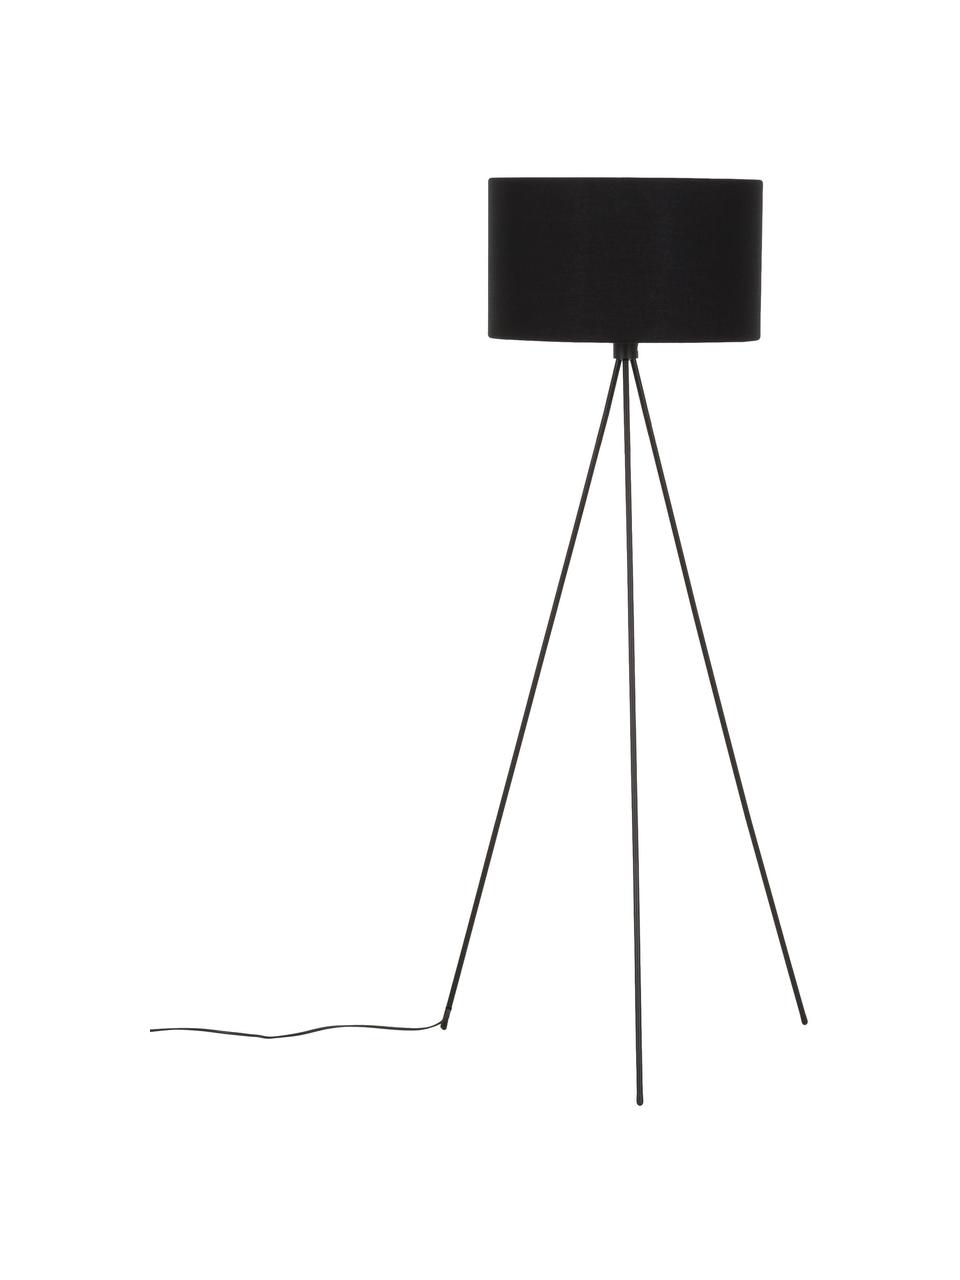 Stojací lampa trojnožka s látkovým stínidlem Cella, Černá, Ø 45 cm, V 147 cm